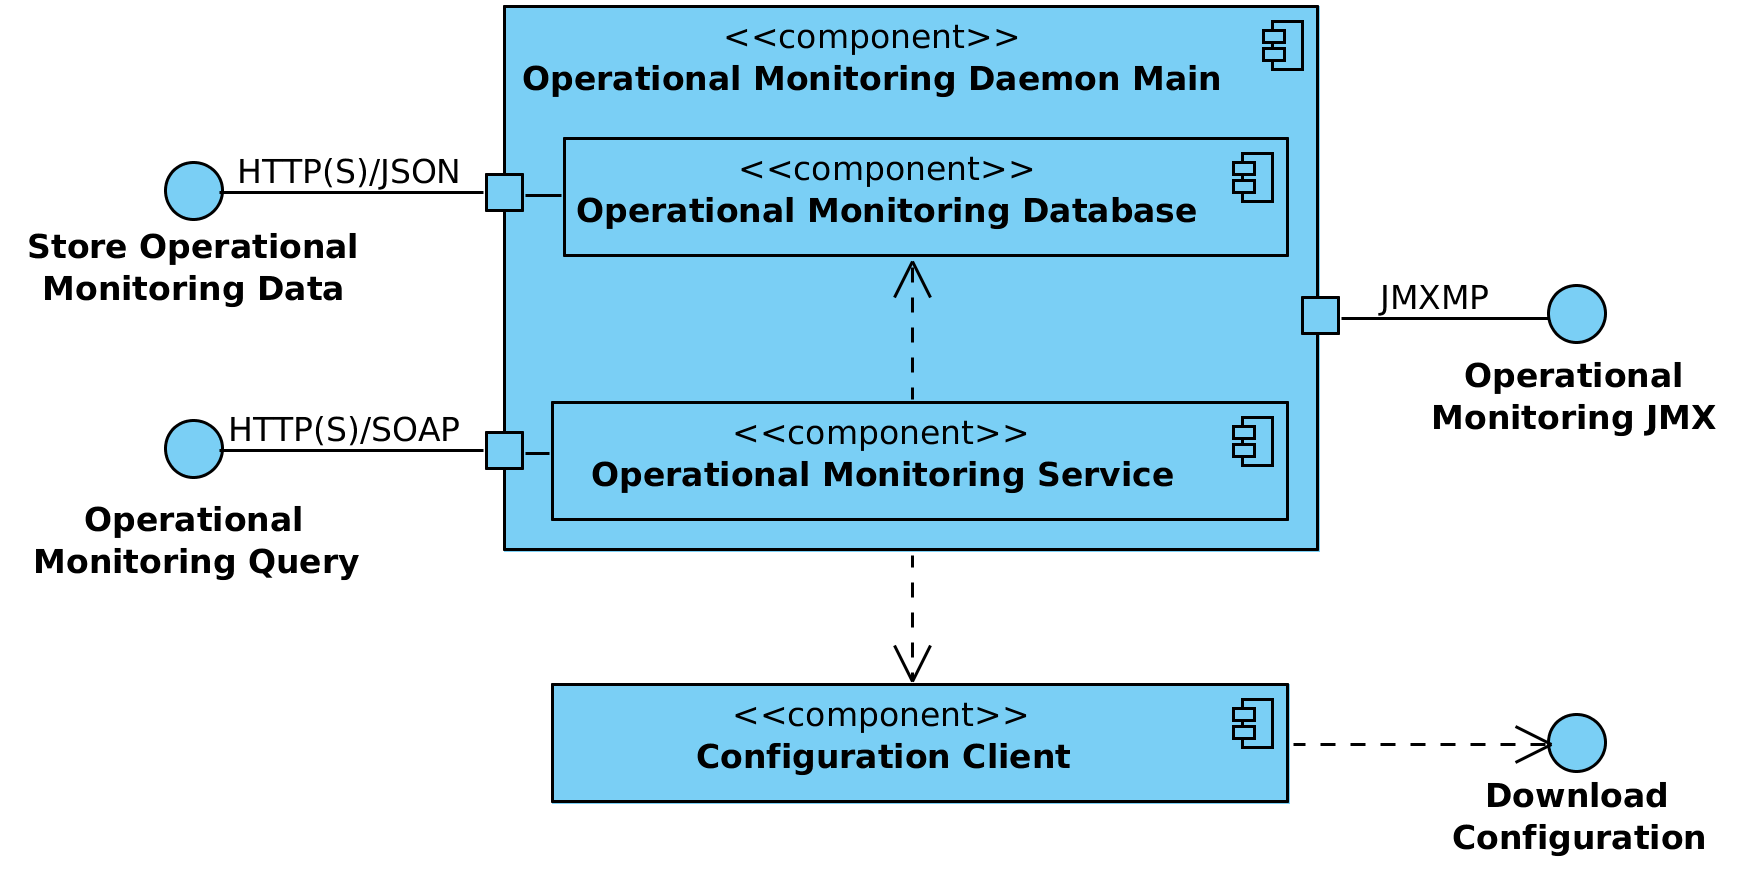 Operational monitoring daemon component diagram